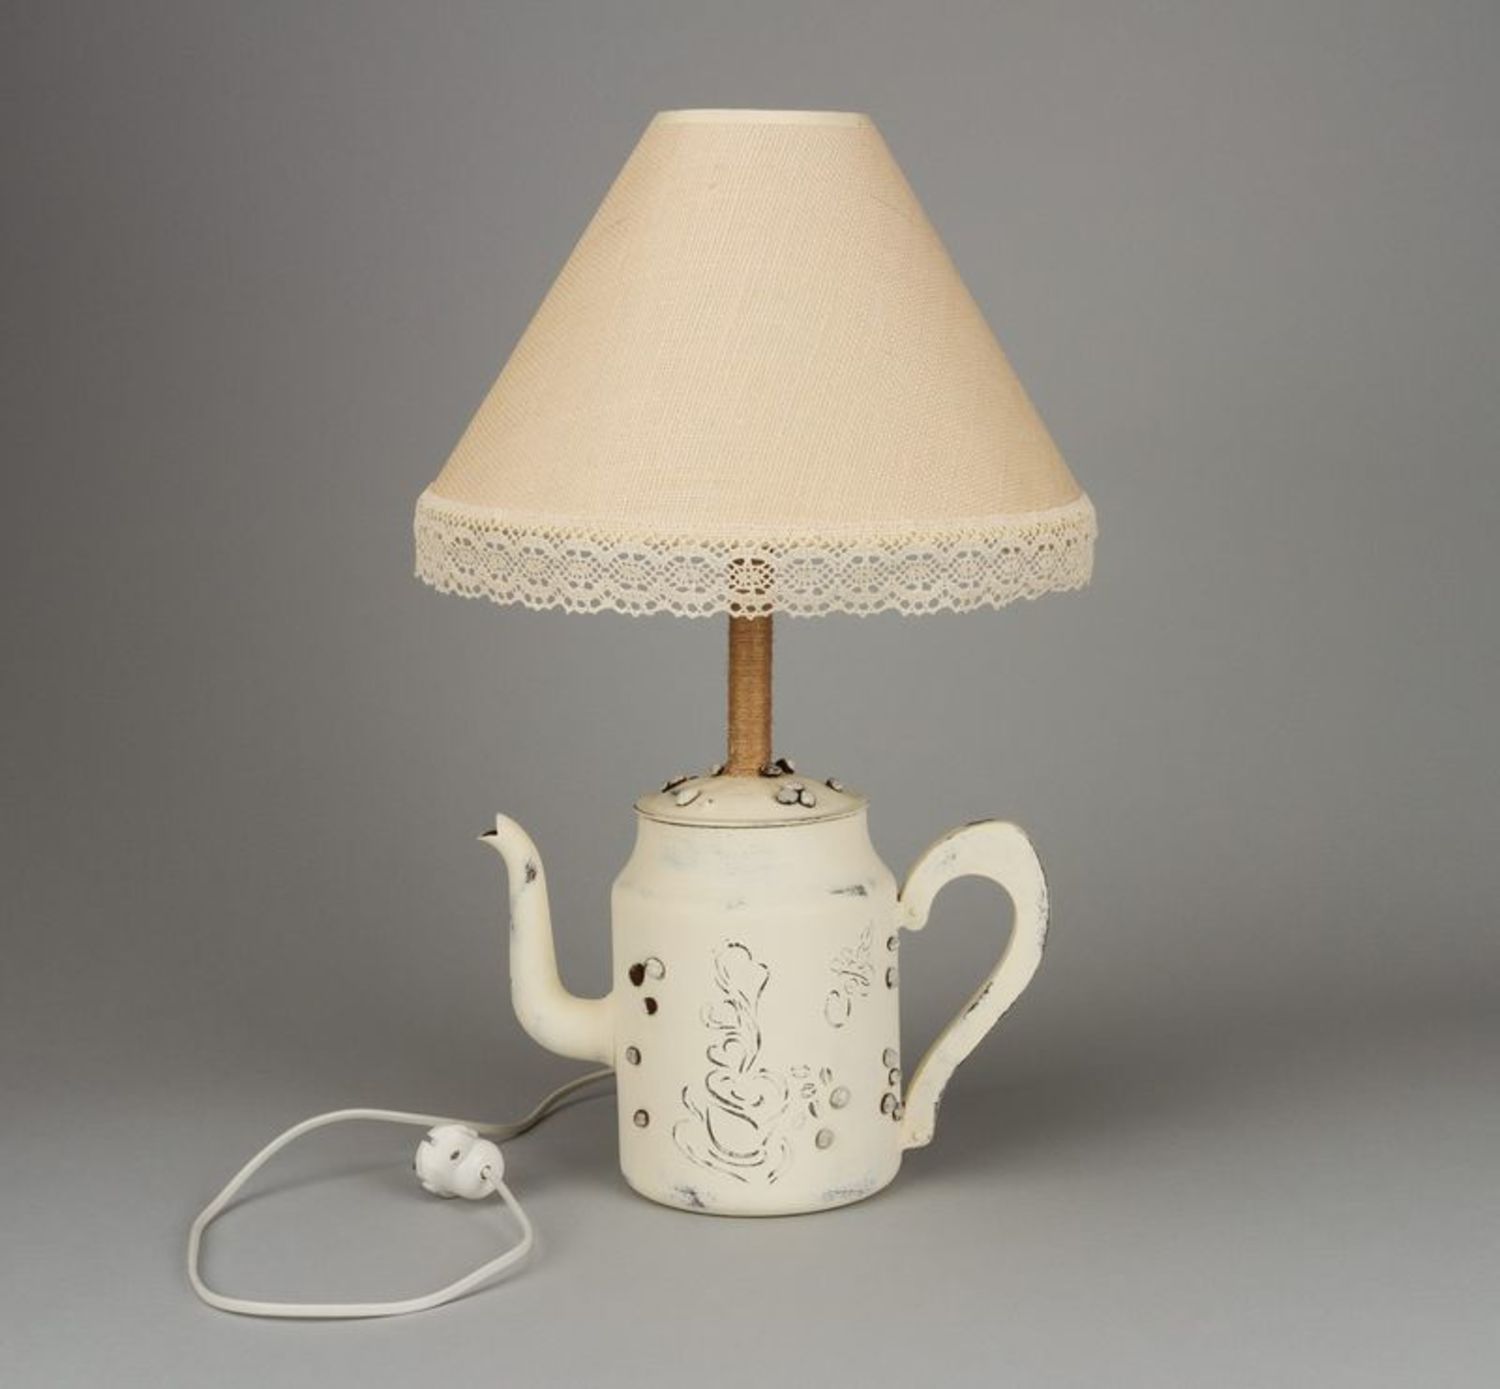 Original lamp in shabby chic style photo 5